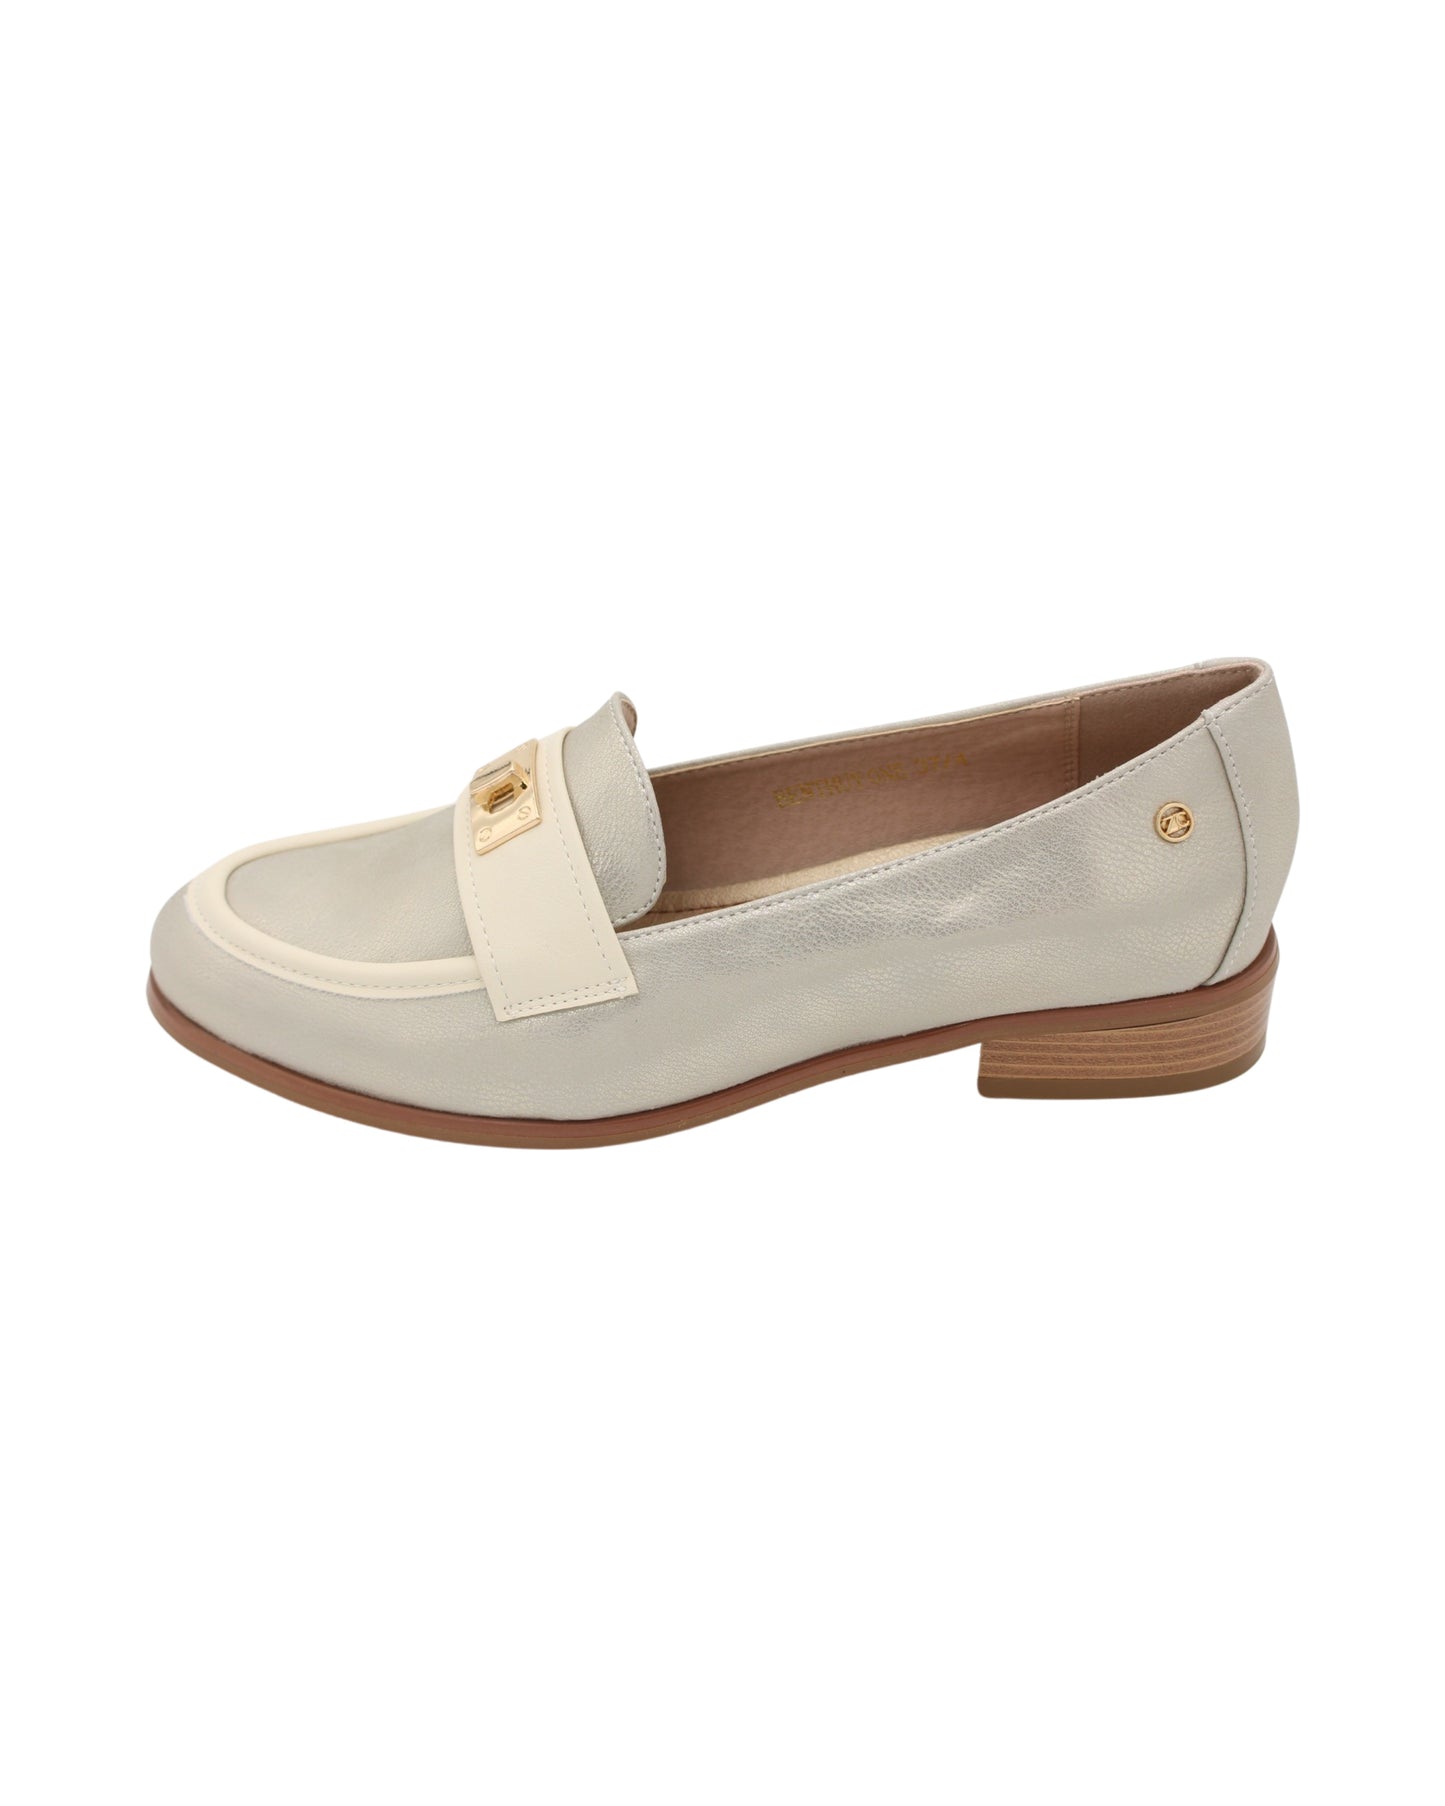 Zanni - Ladies Shoes Loafers Grey, Cream (2155)